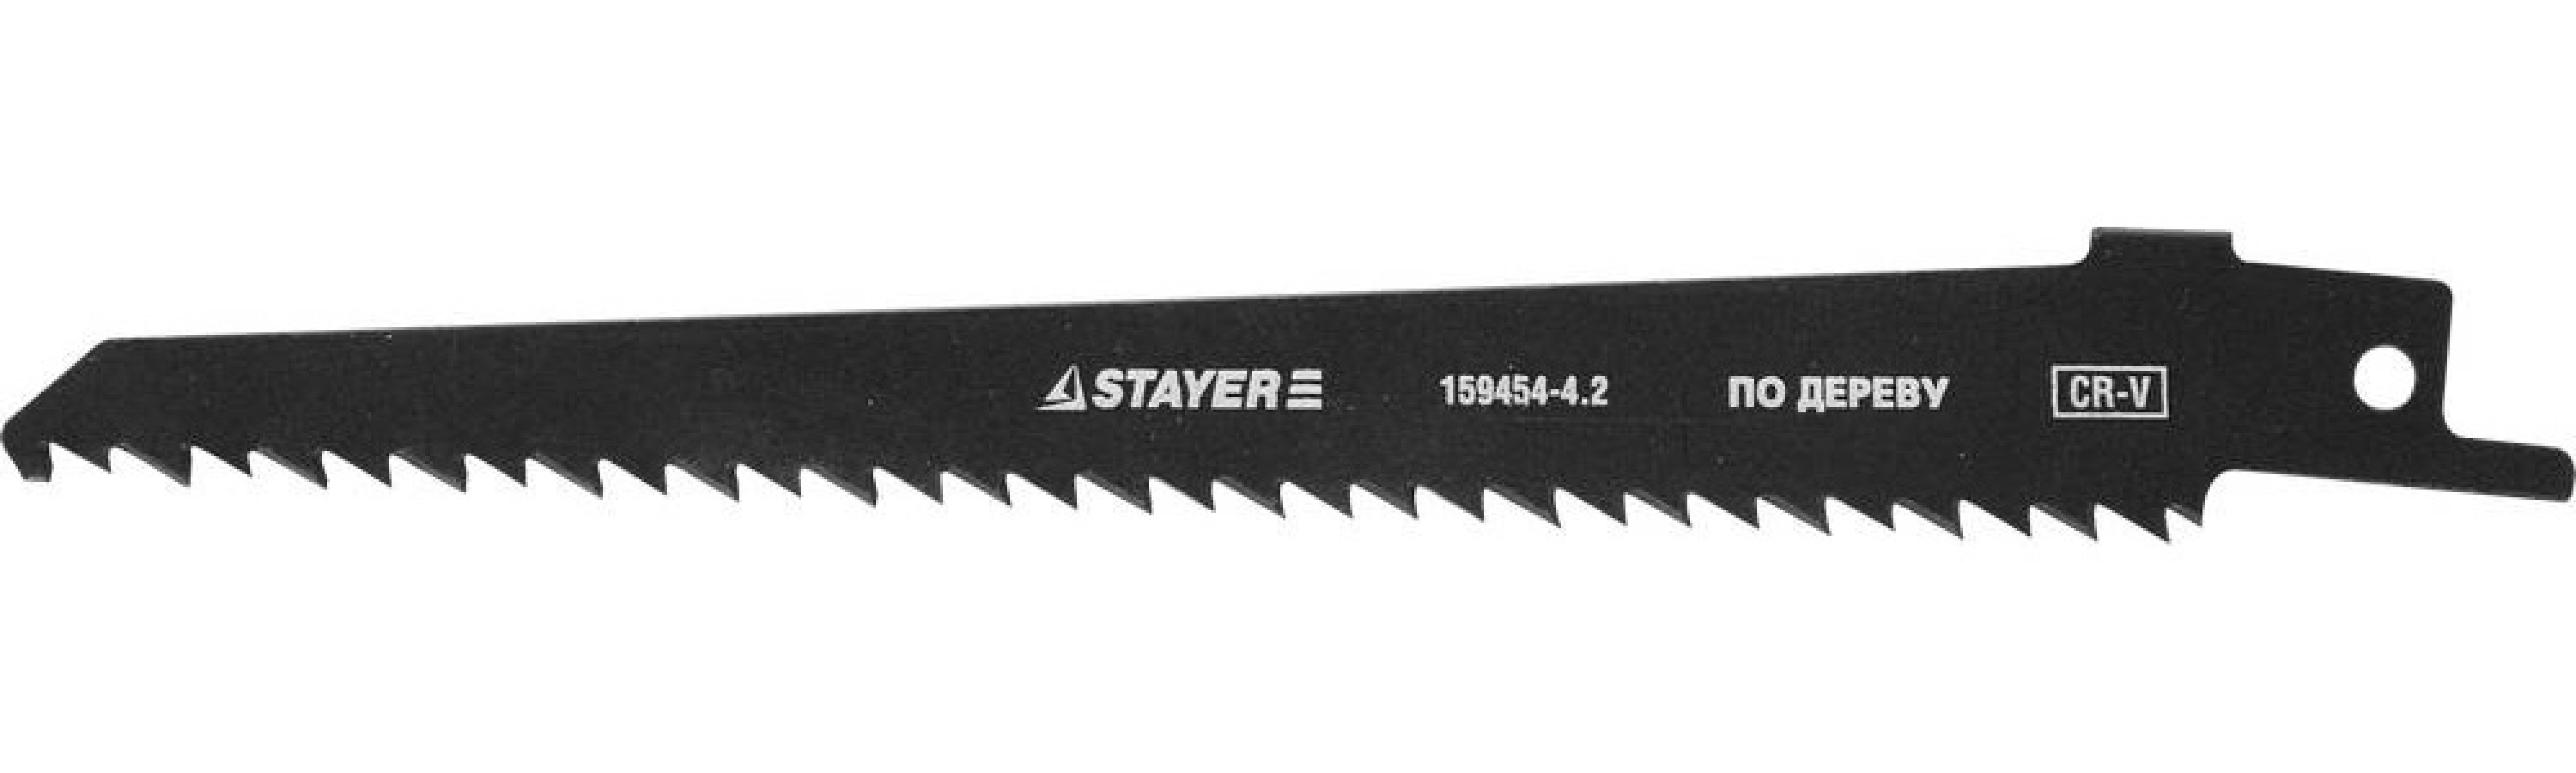 STAYER L-130 150, Cr-V, S644D,     (159454-4.2)